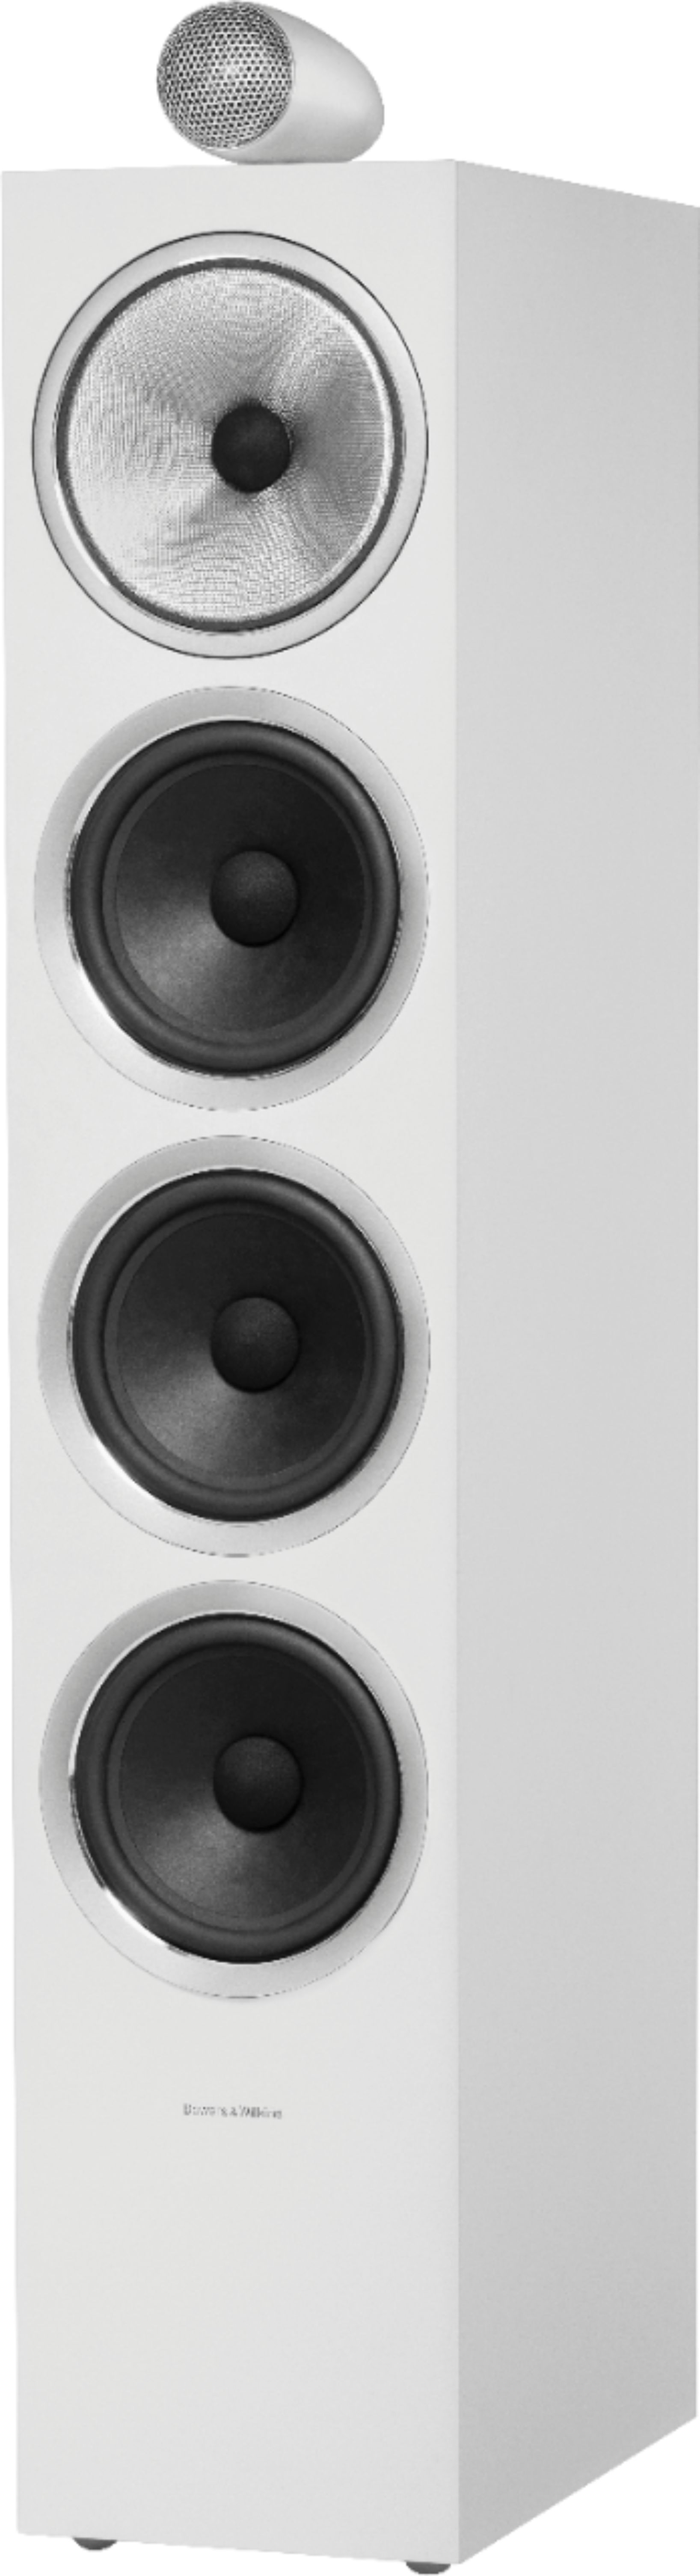 Angle View: Bowers & Wilkins - 700 Series 3-way Floorstanding Speaker w/ Tweeter on top, w/6" midrange, three 6.5" bass drivers (each) - Satin white